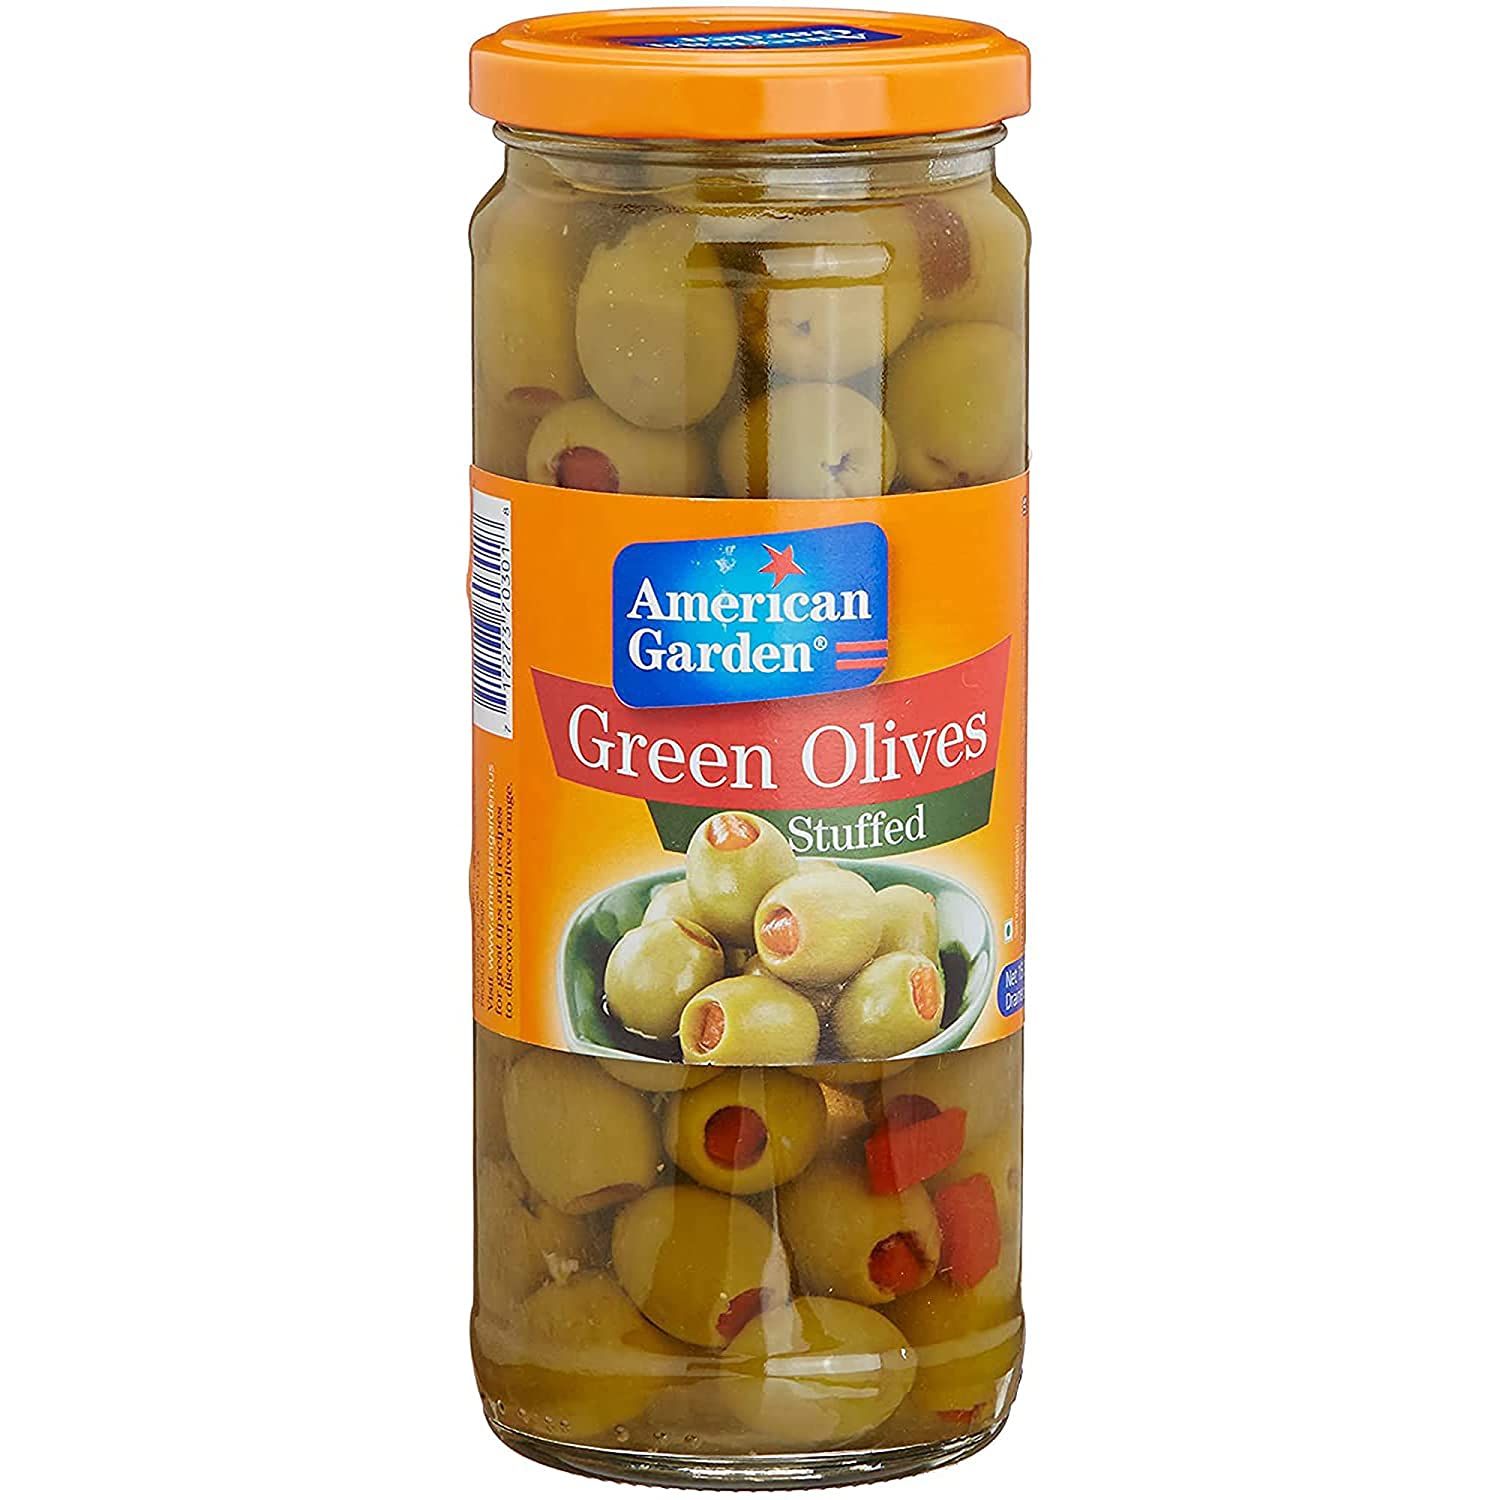 American Garden Green Olives Stuffed Image